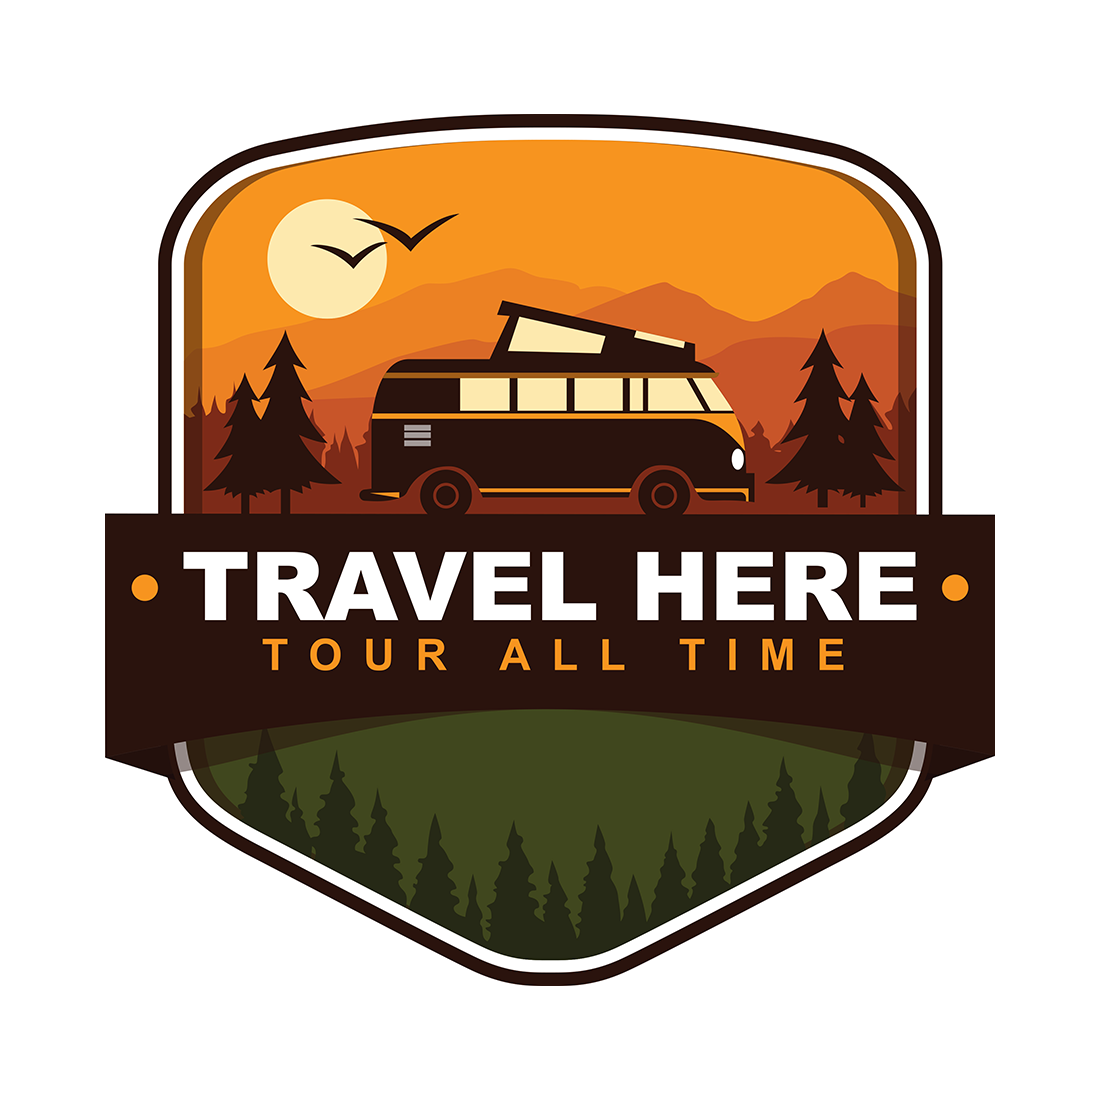 Bus, travel bus logo vector - SuperStock